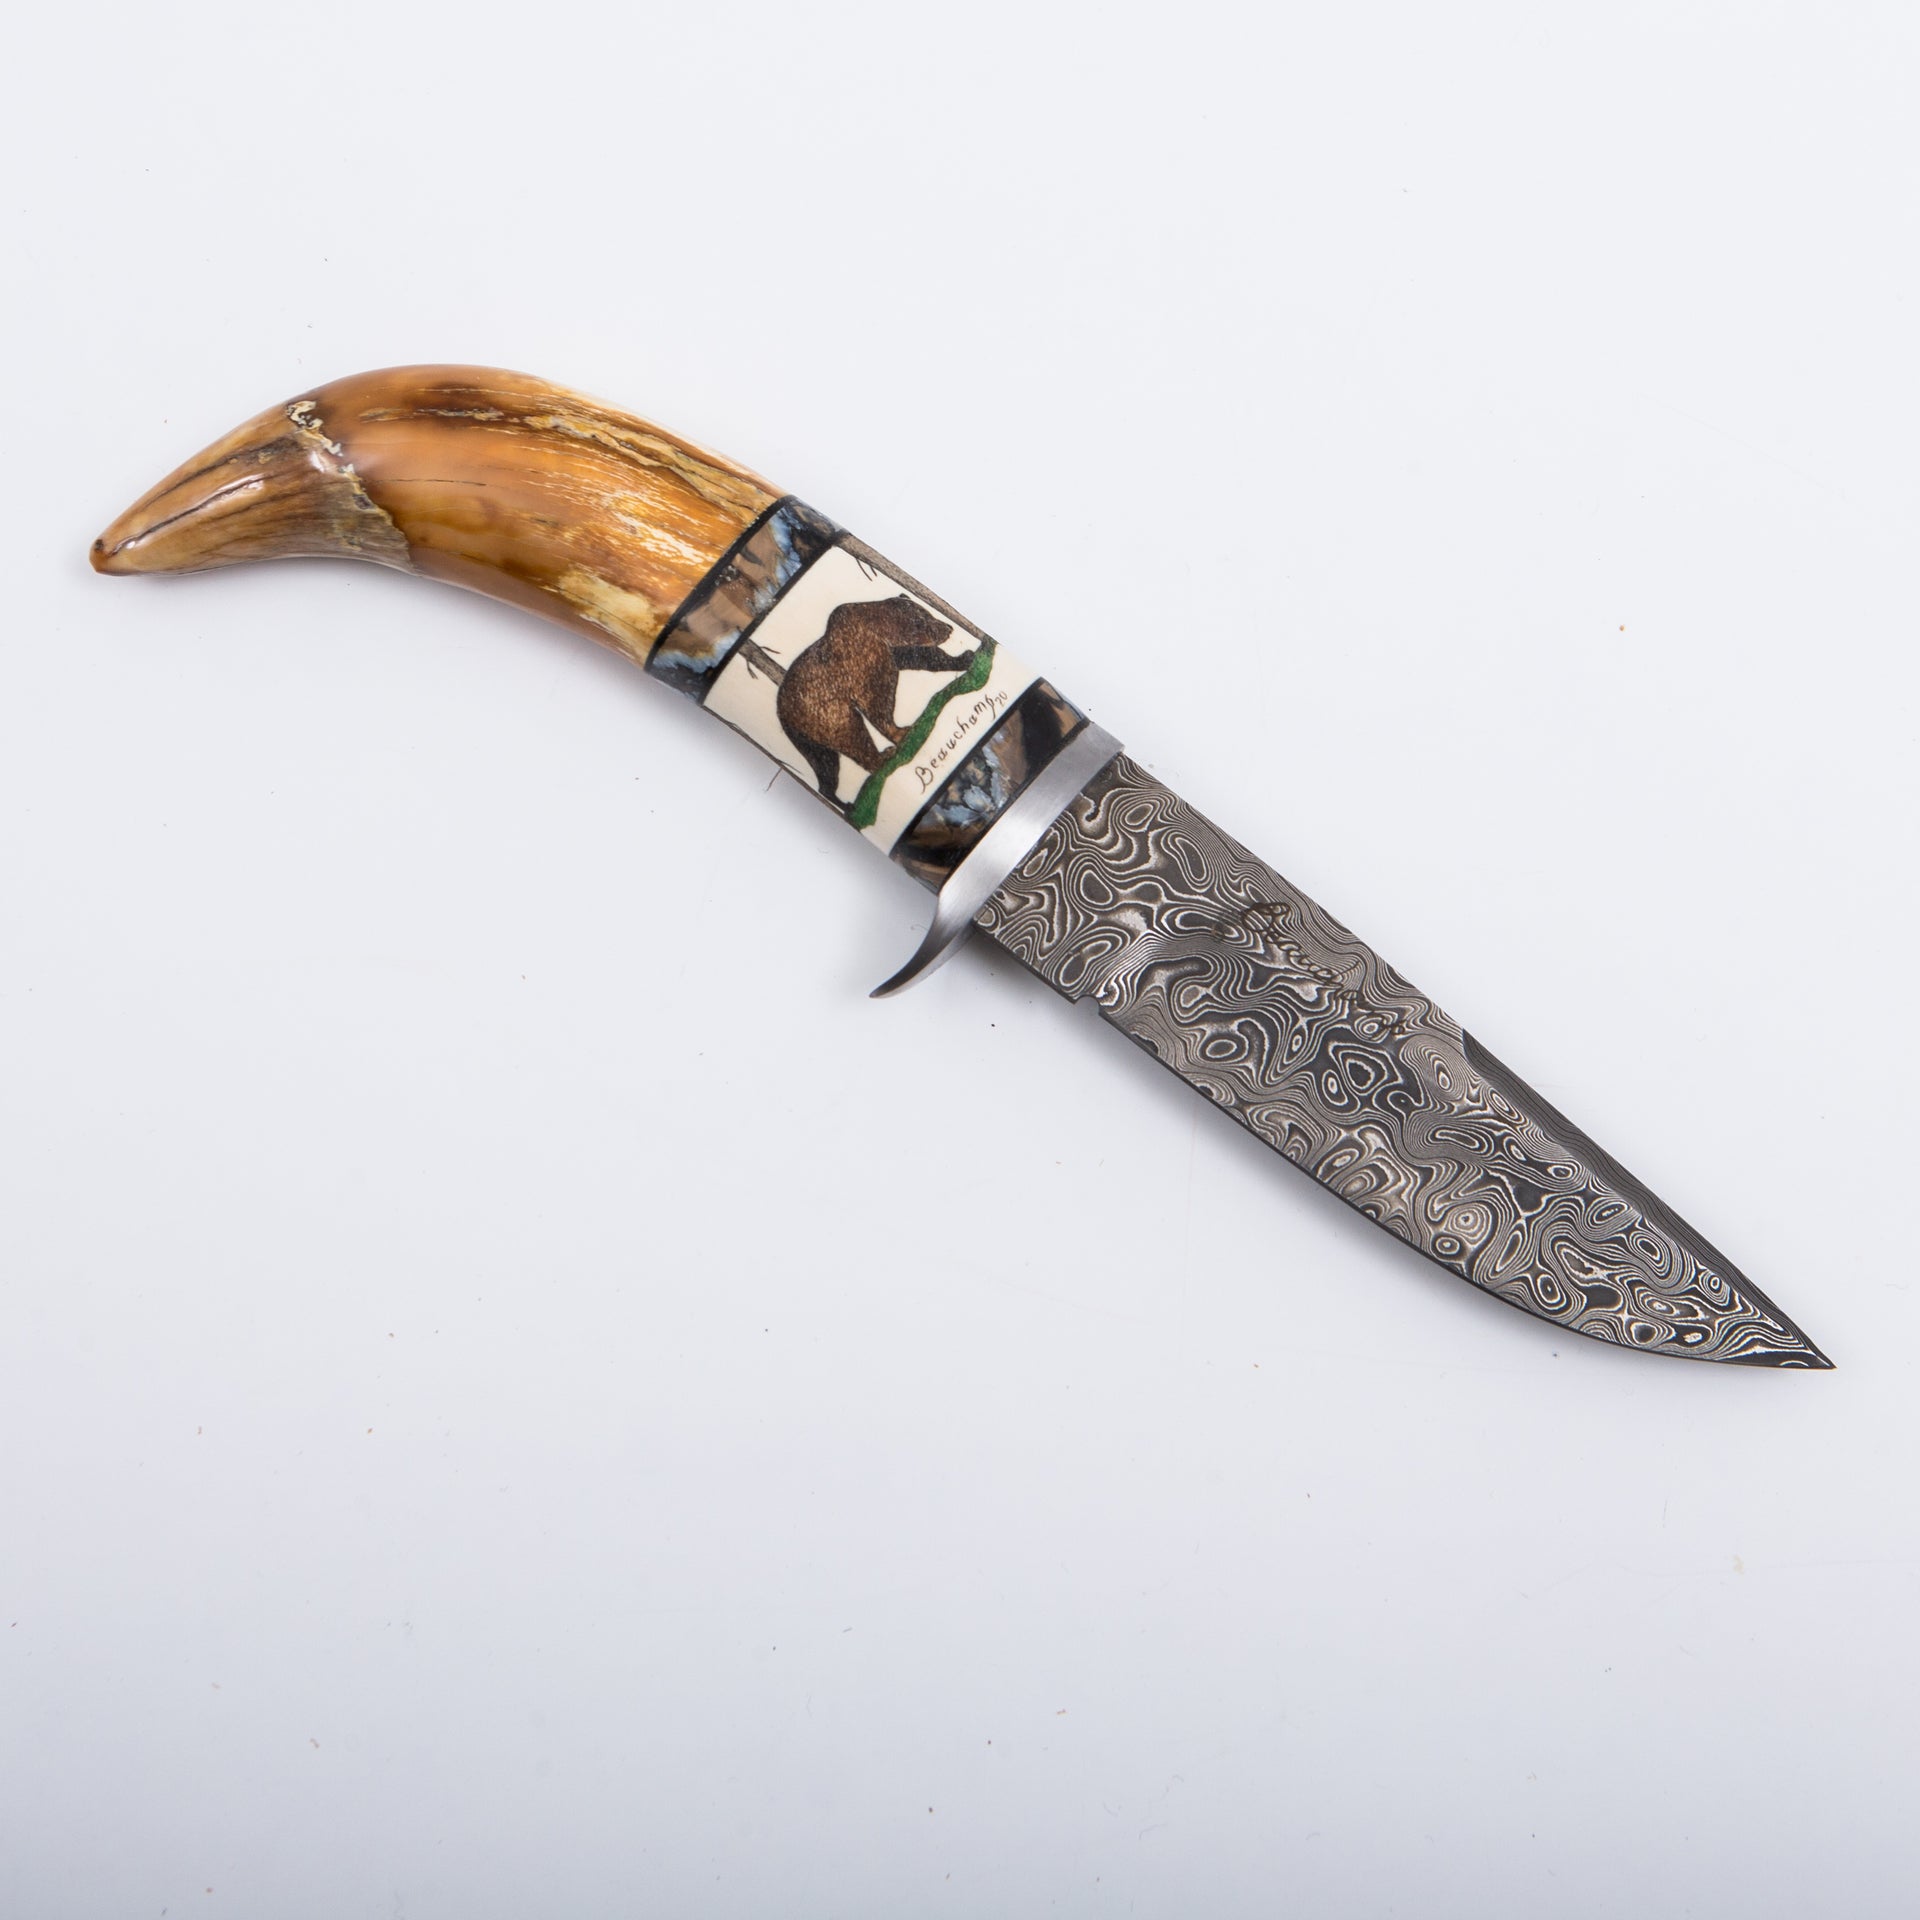 Cave bear tooth knife